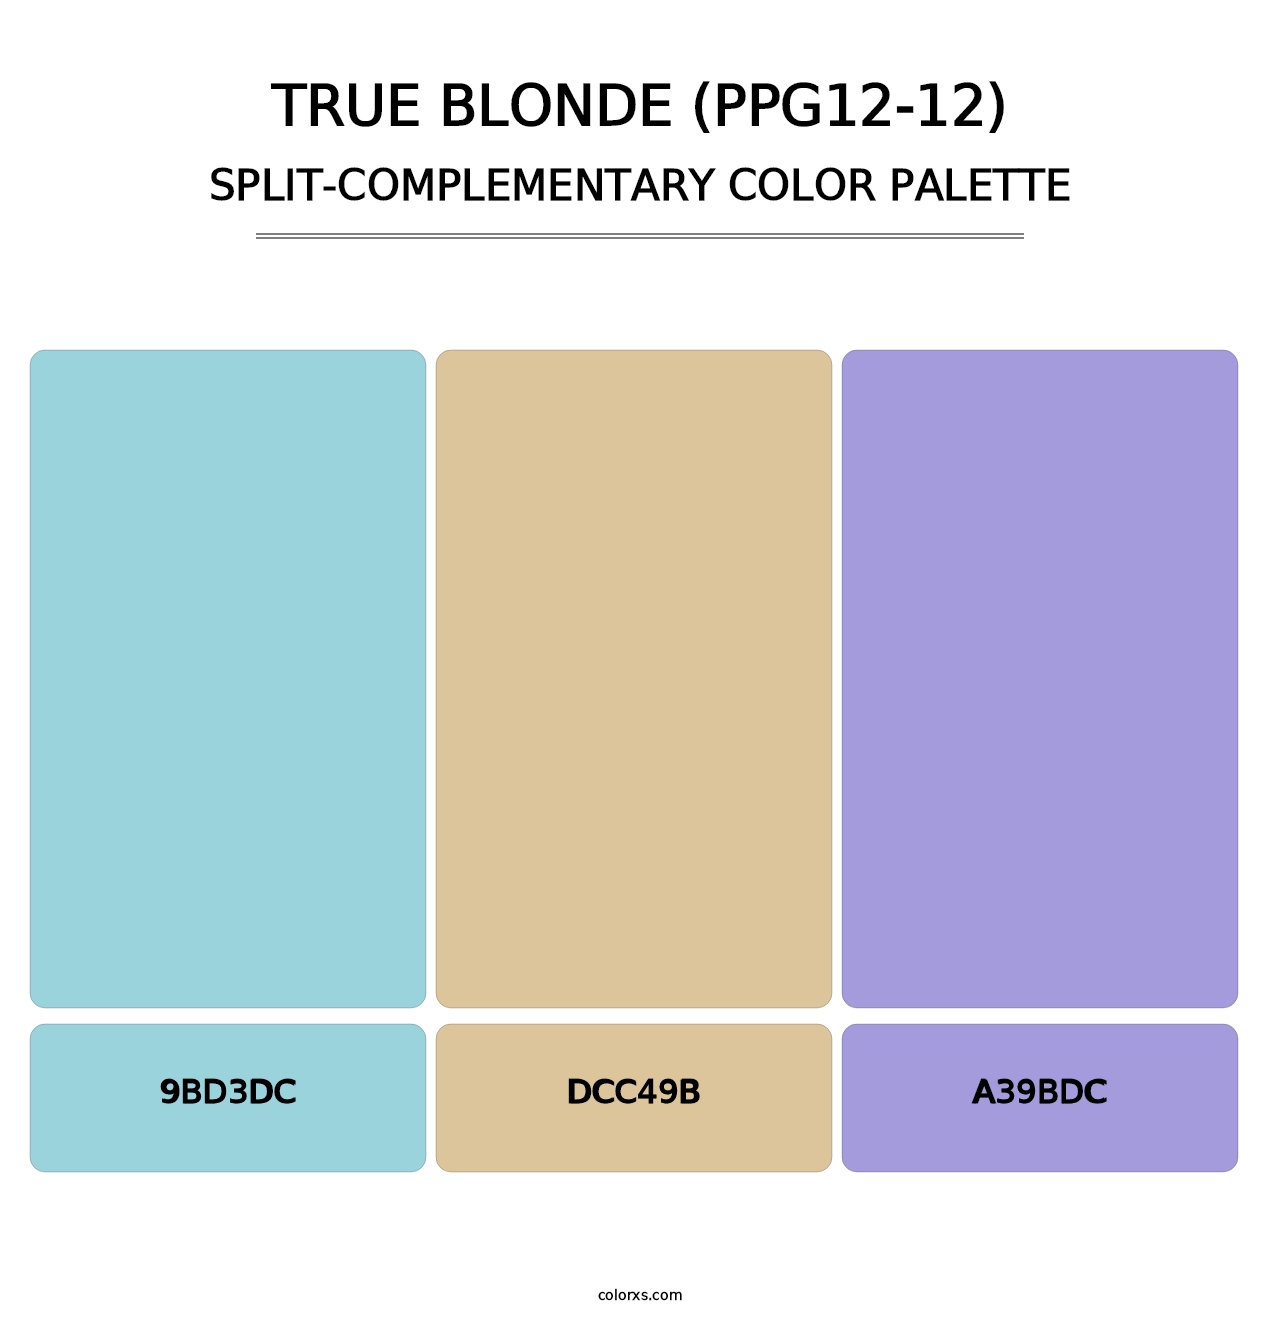 True Blonde (PPG12-12) - Split-Complementary Color Palette